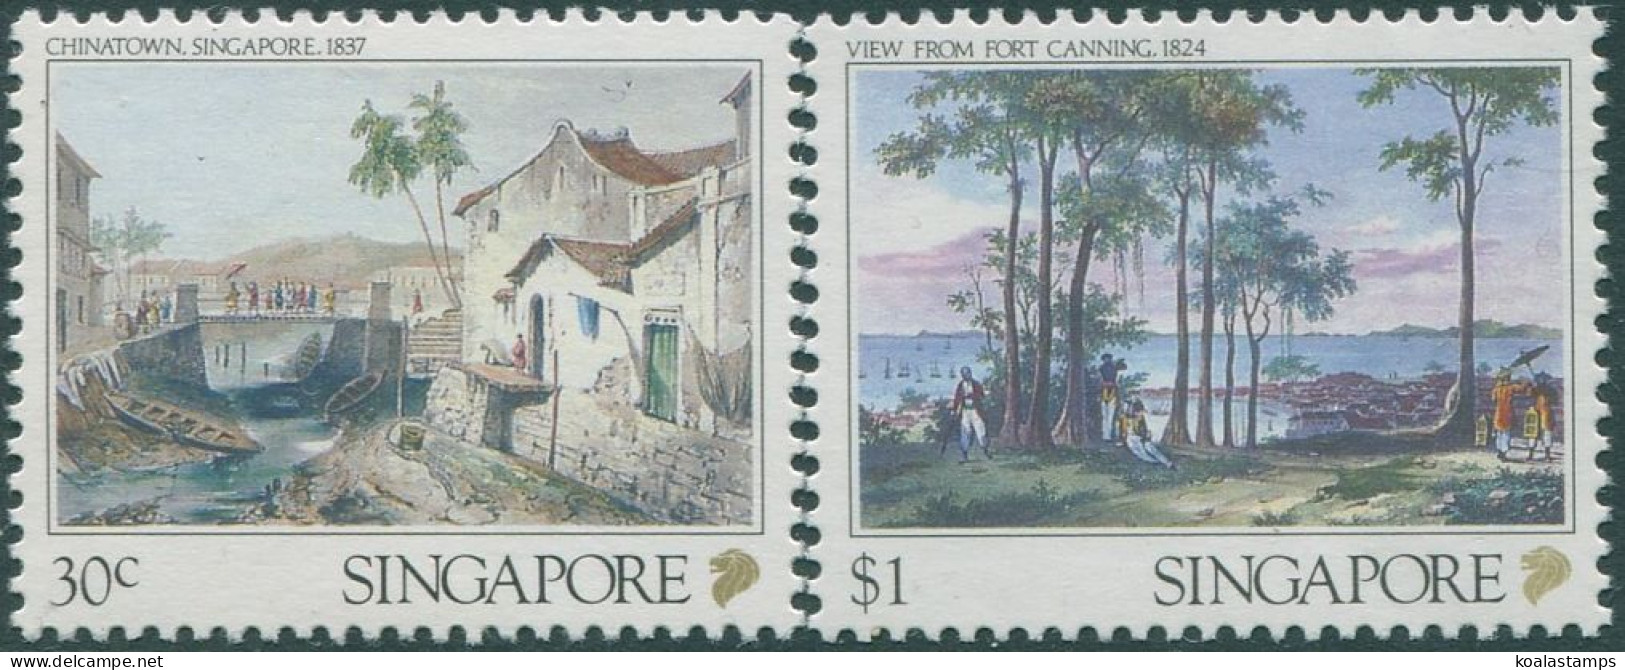 Singapore 1990 SG616-618 Lithographs (2) MNH - Singapur (1959-...)